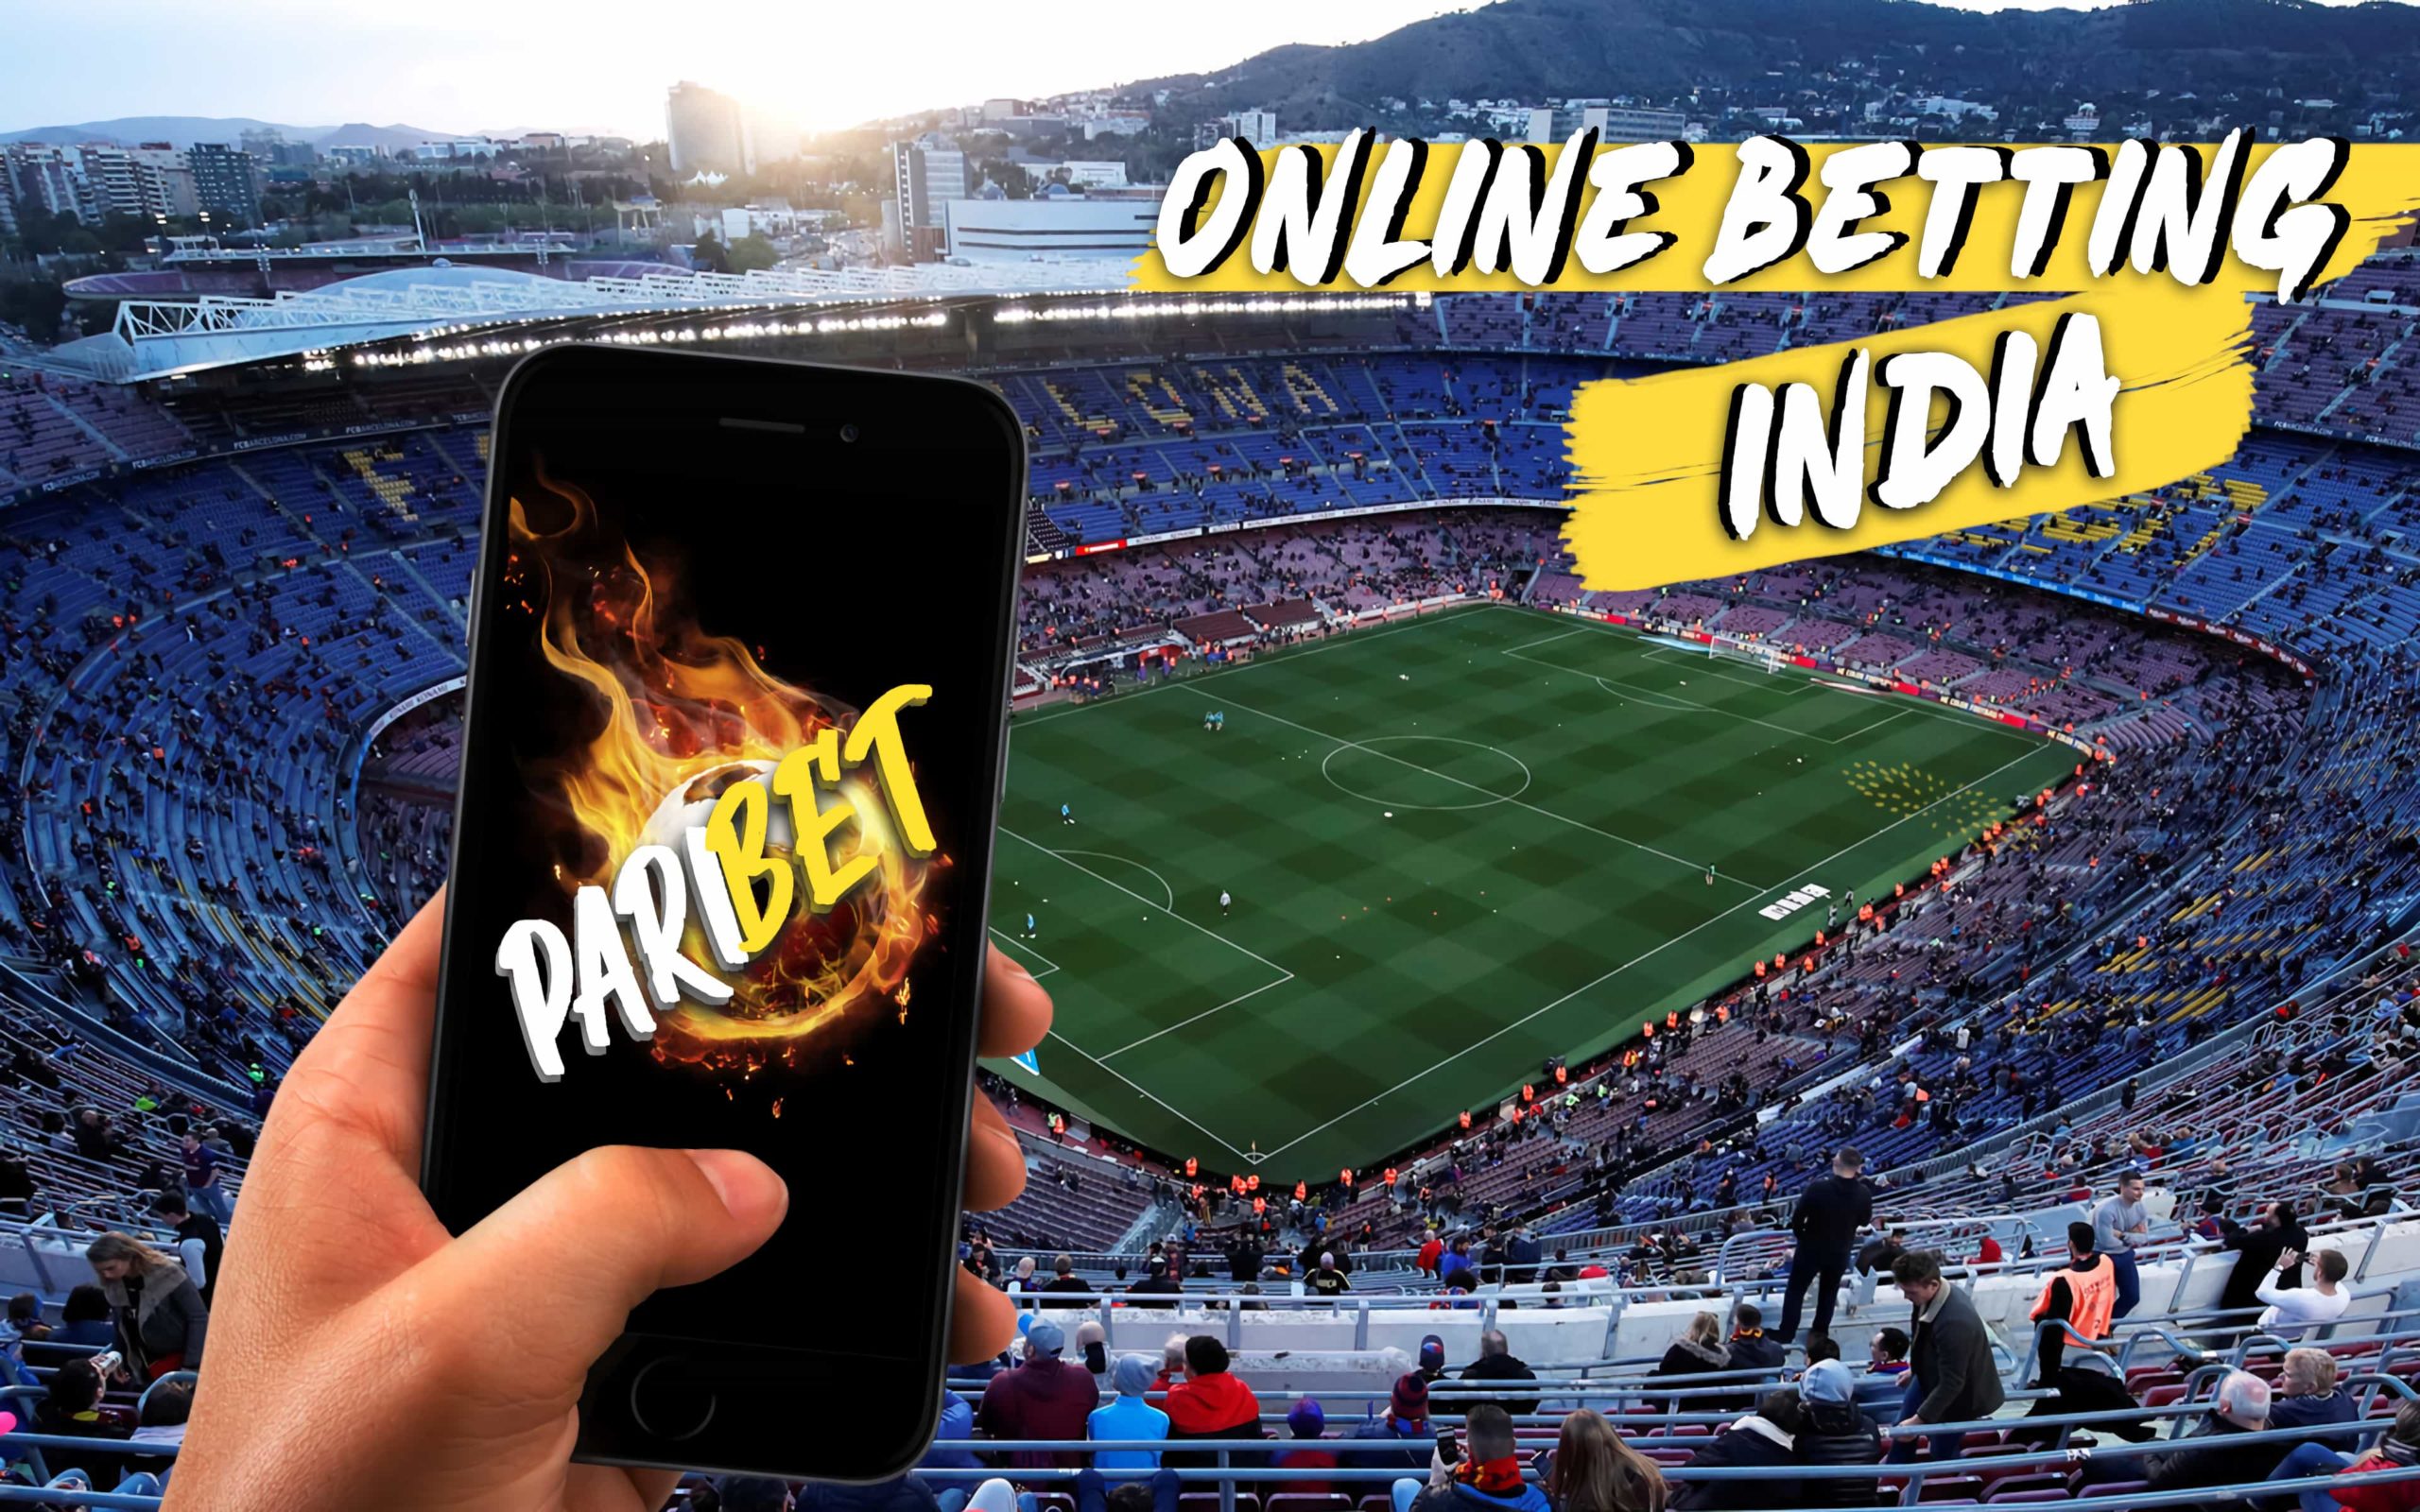 Bet online India with Pari bet